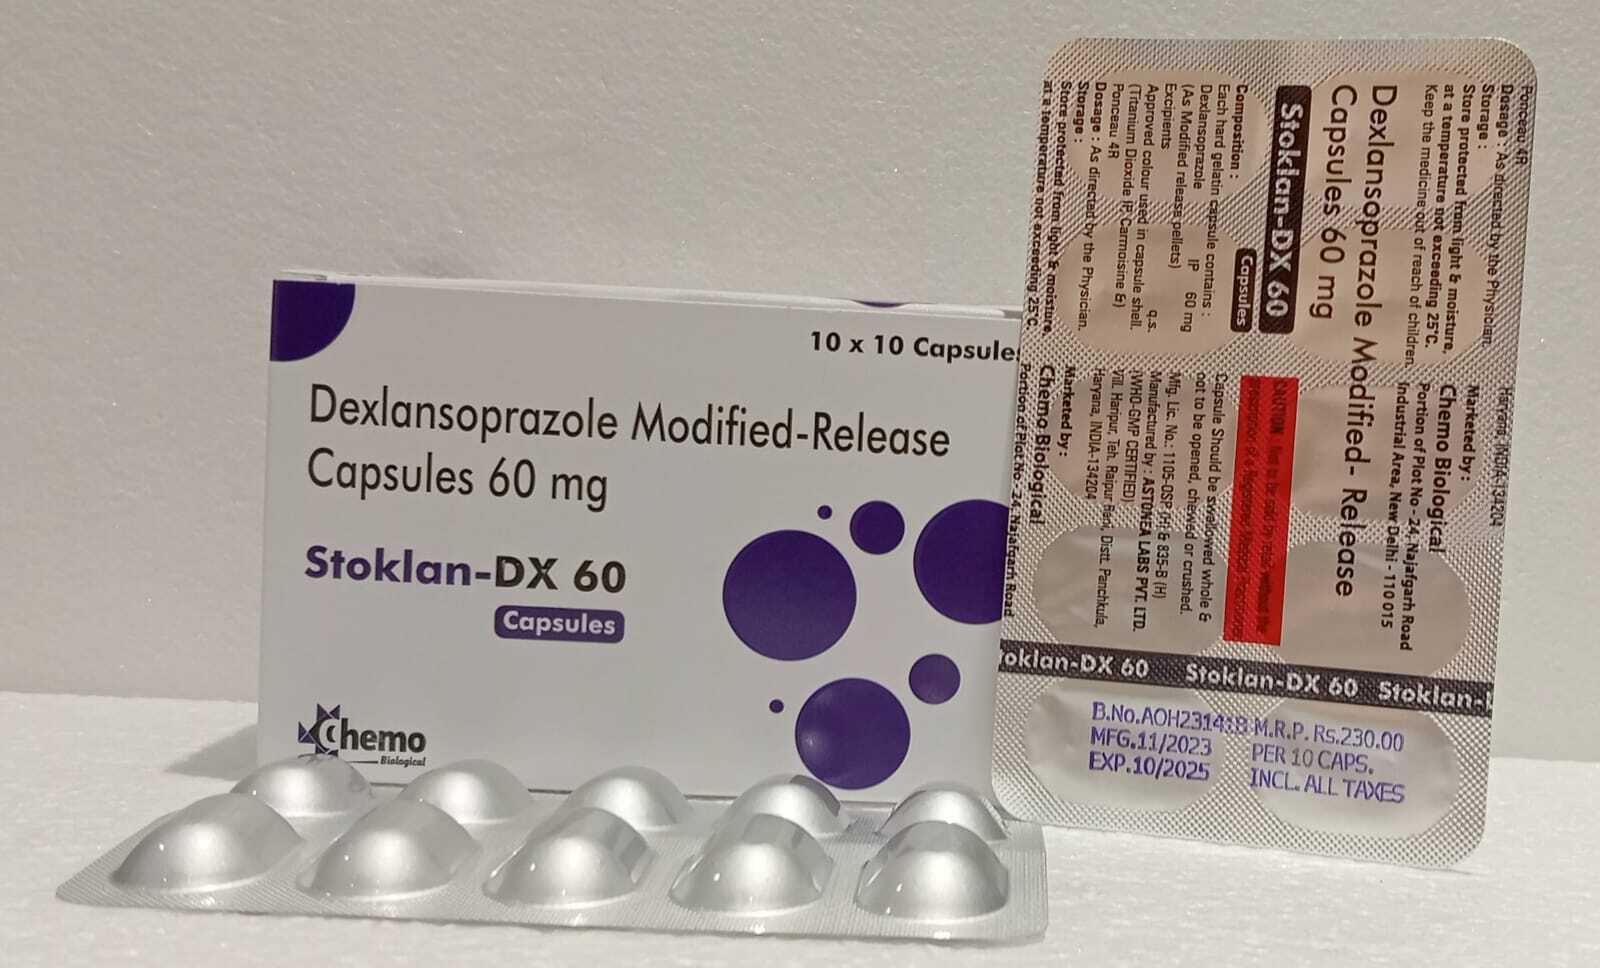 Dexlansoprazole 60mg delayed release Capsules